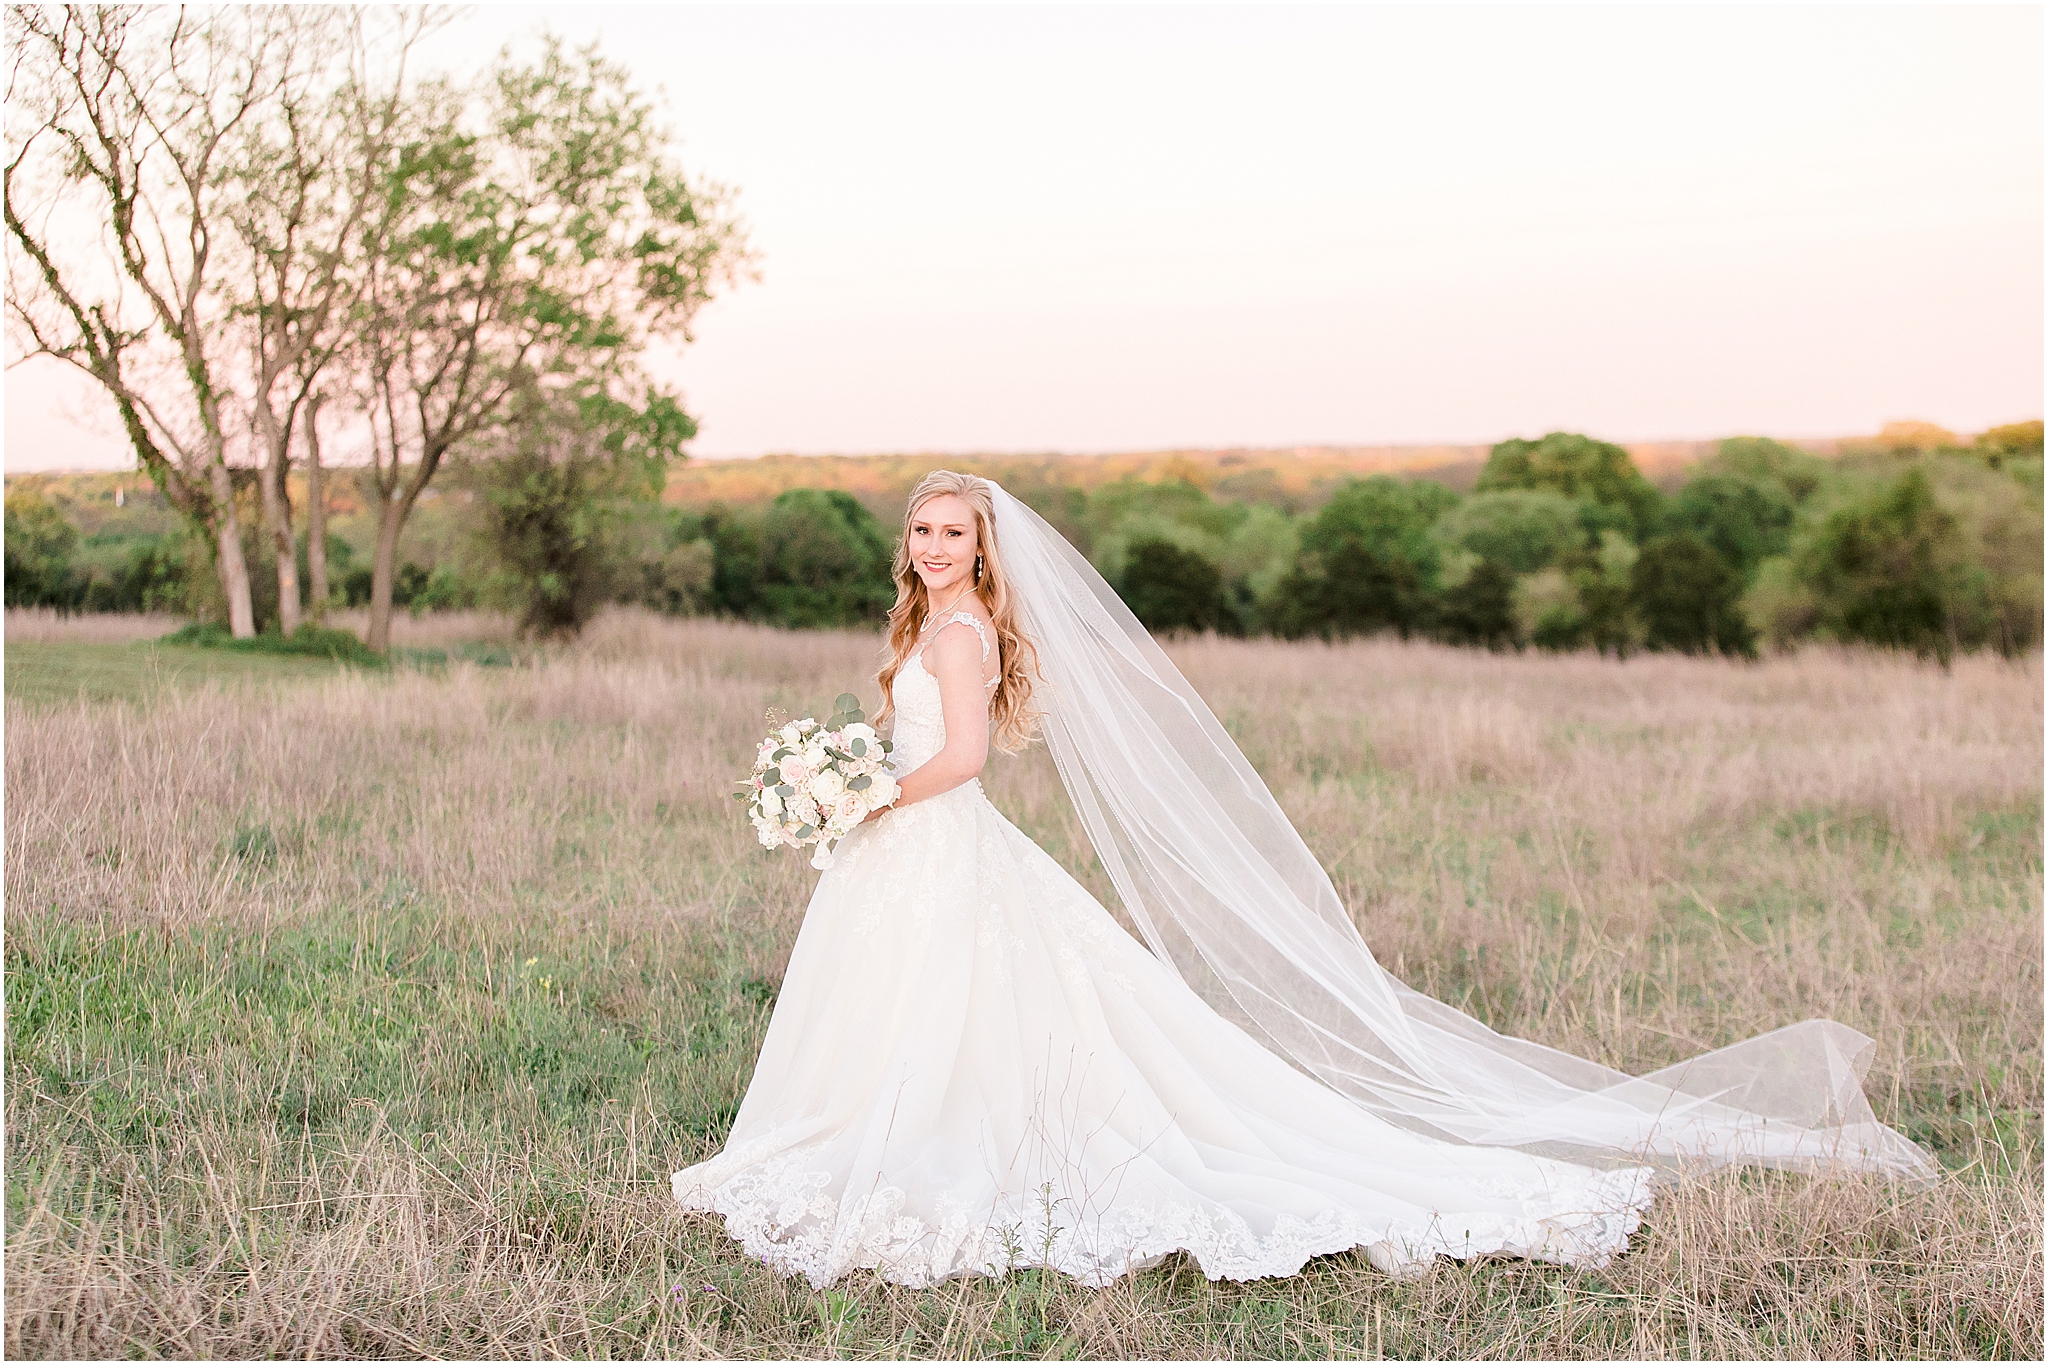 Sunset bridal Session by Dallas Wedding Photographer Jillian Hogan Photography 